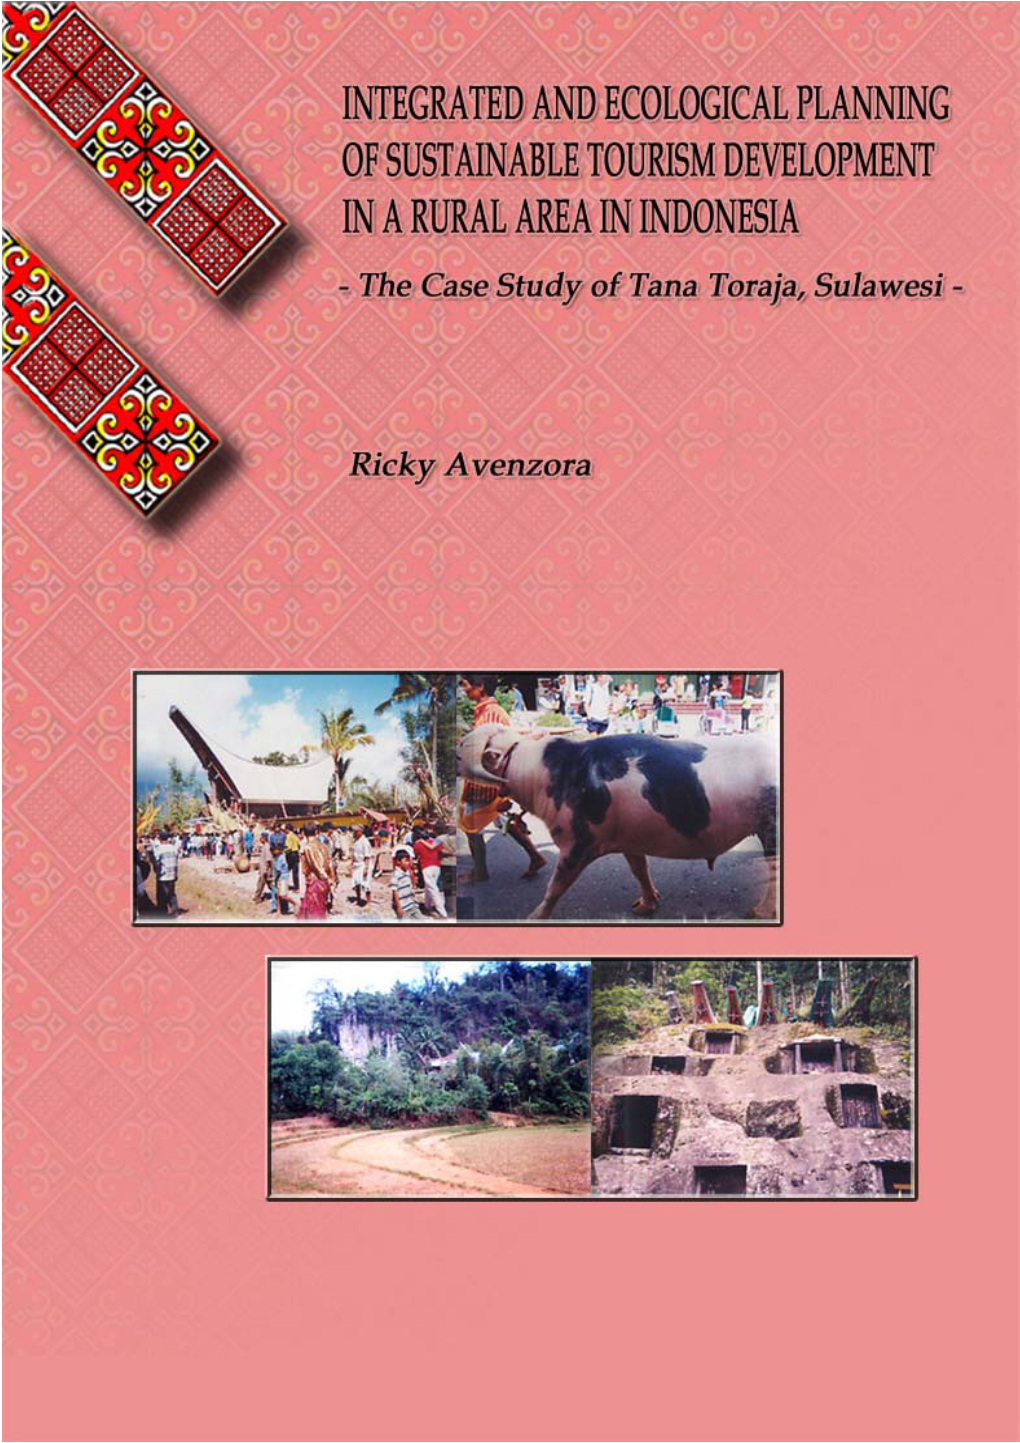 The Case Study of Tana Toraja, Sulawesi